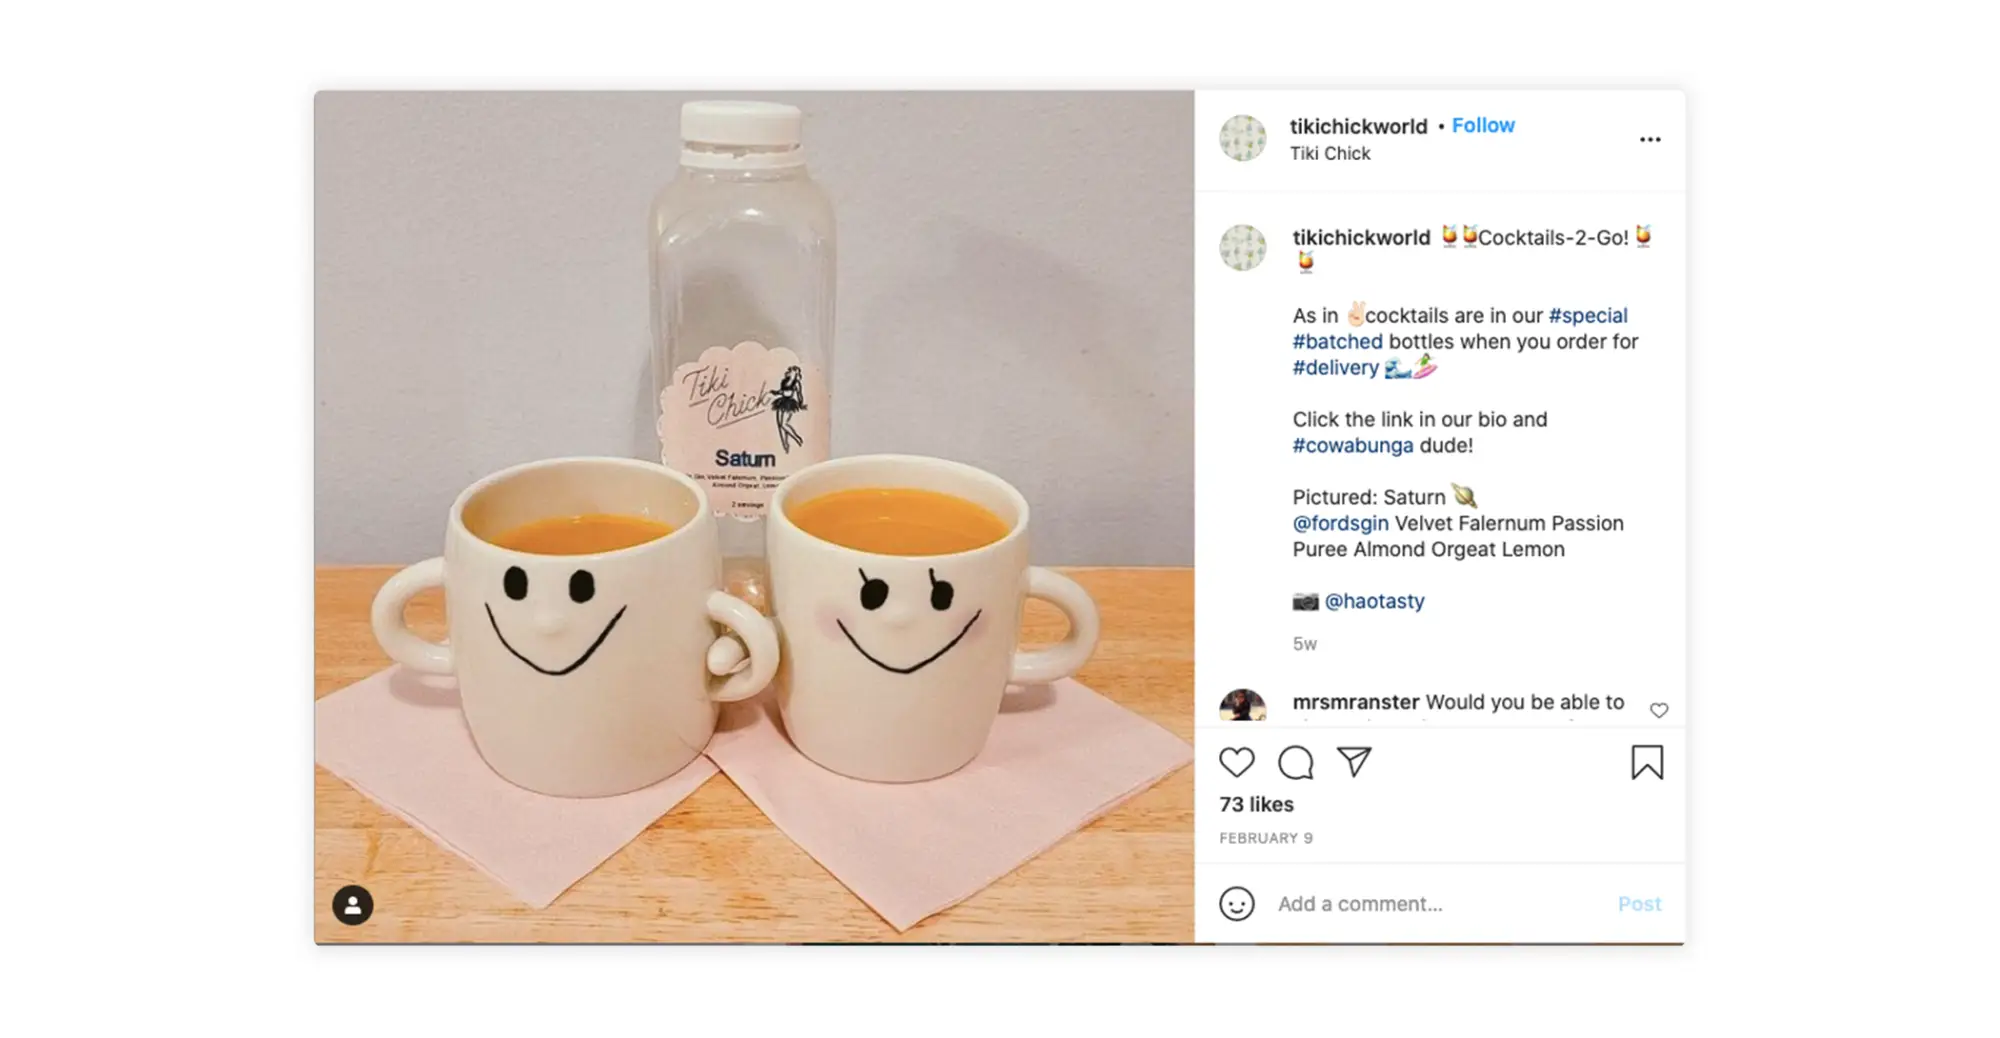 Tiki Chick promotes to-go cocktail delivery via Instagram